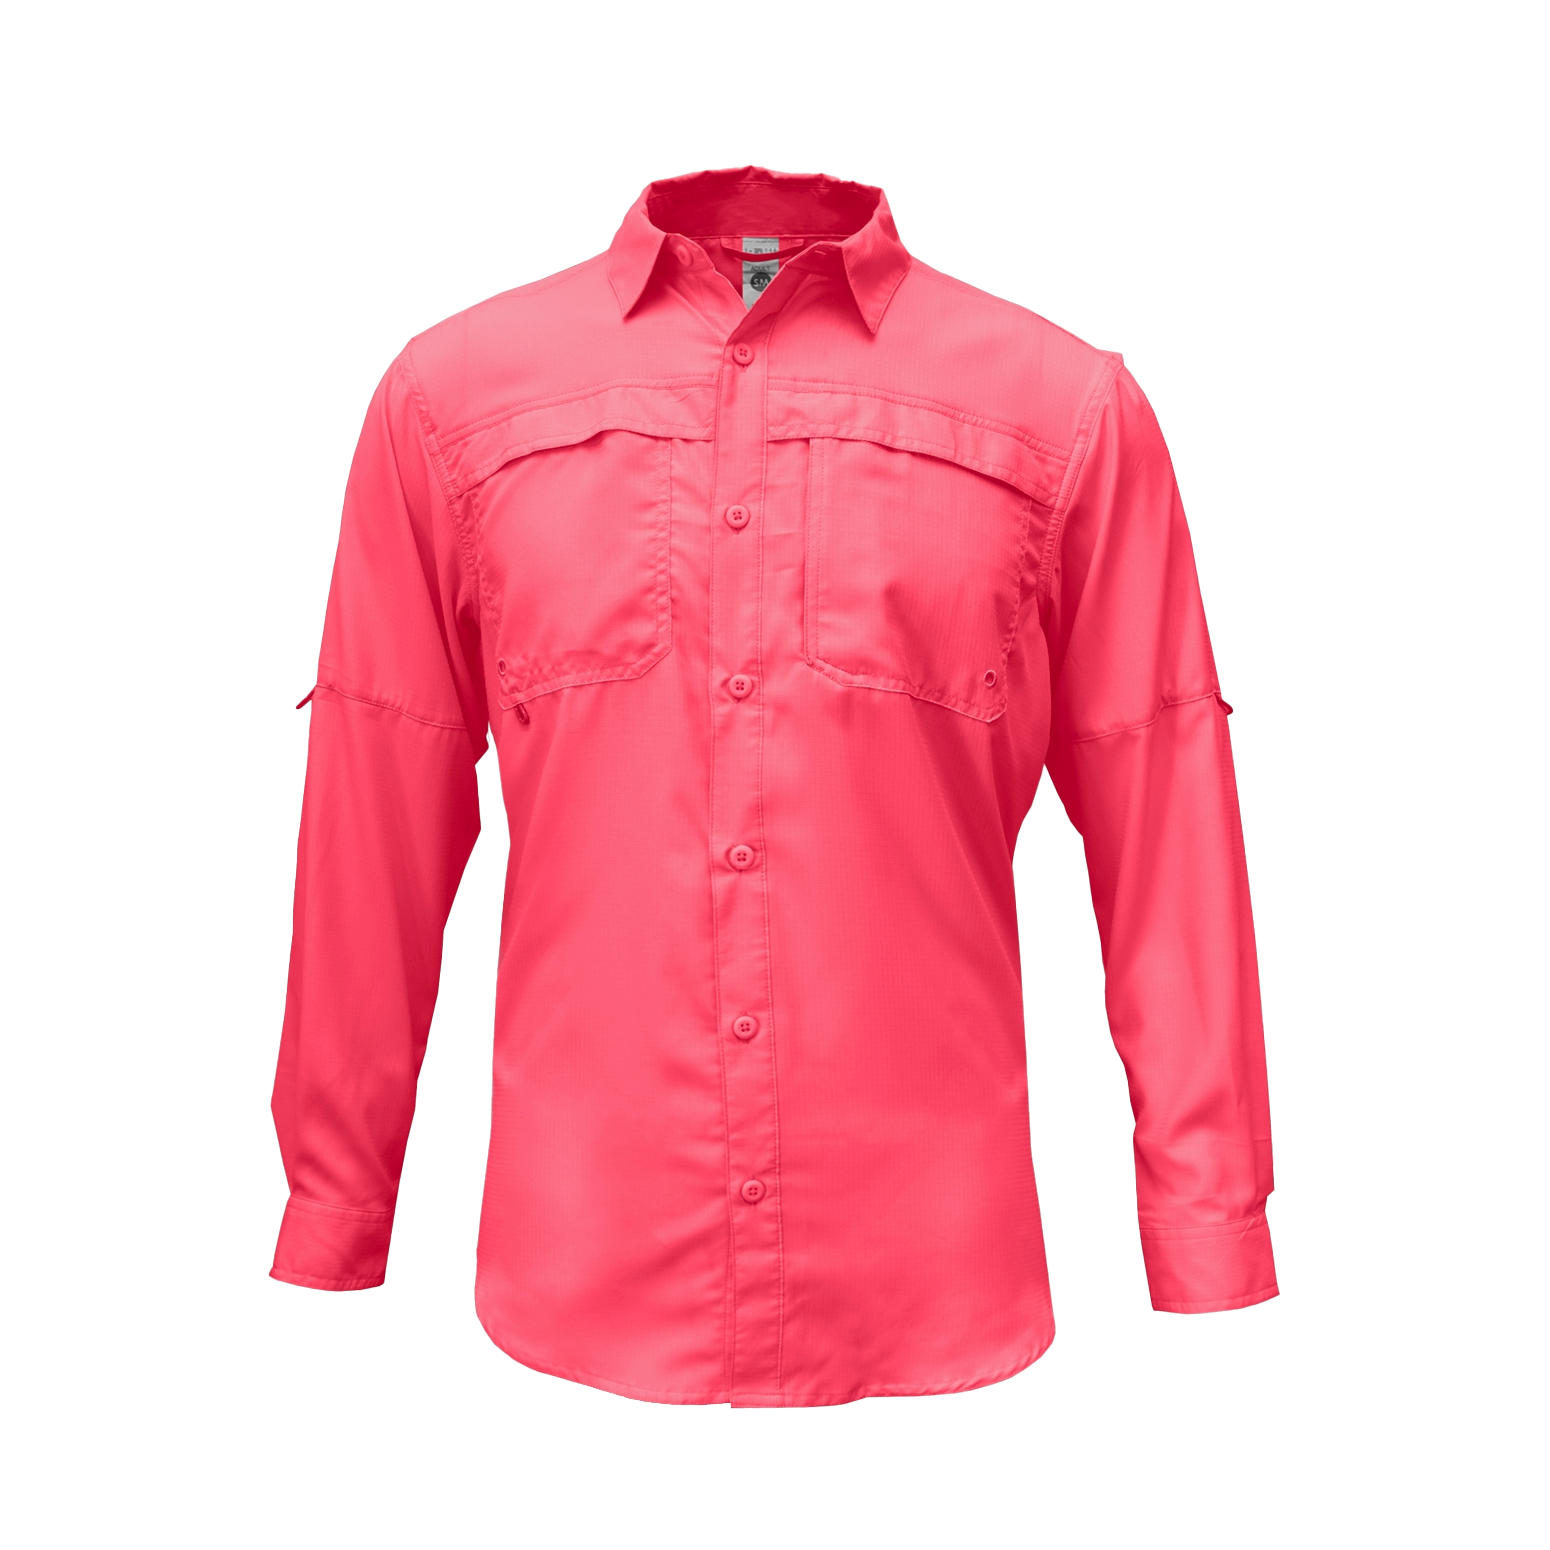 Habit mens short sleeve button up red fishing shirt, 100